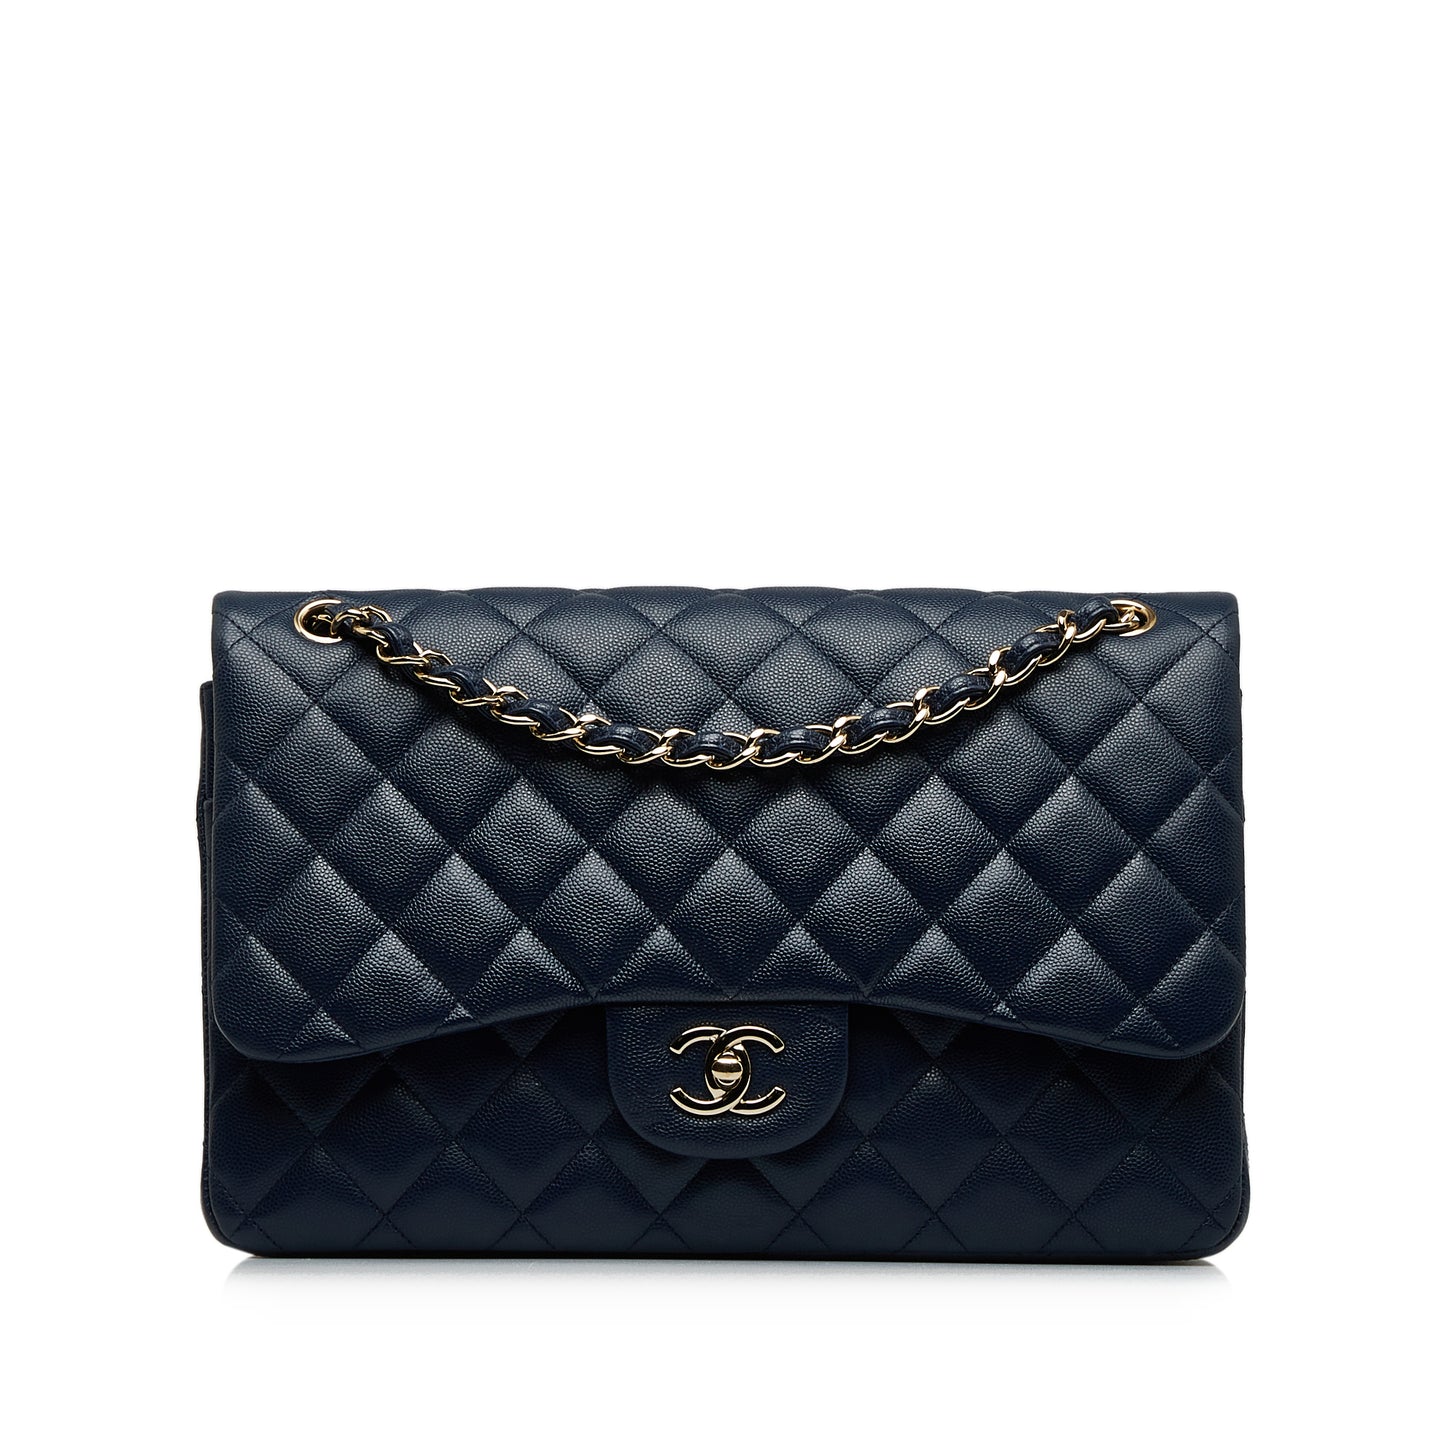 Chanel Jumbo Classic Double Flap - Caviar Leather